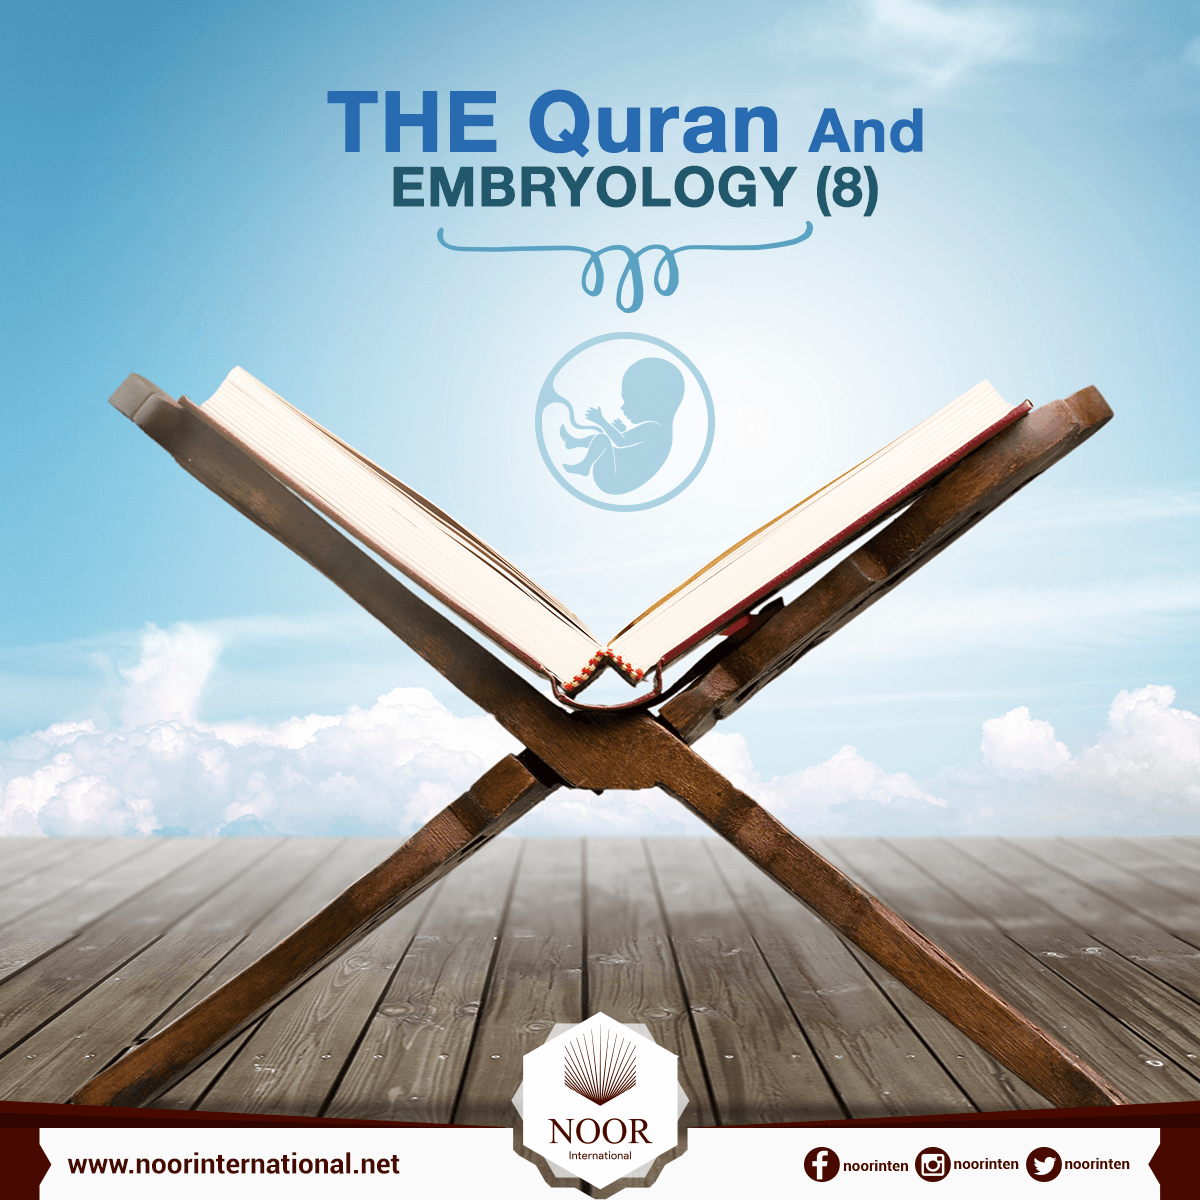 The amazing Quran